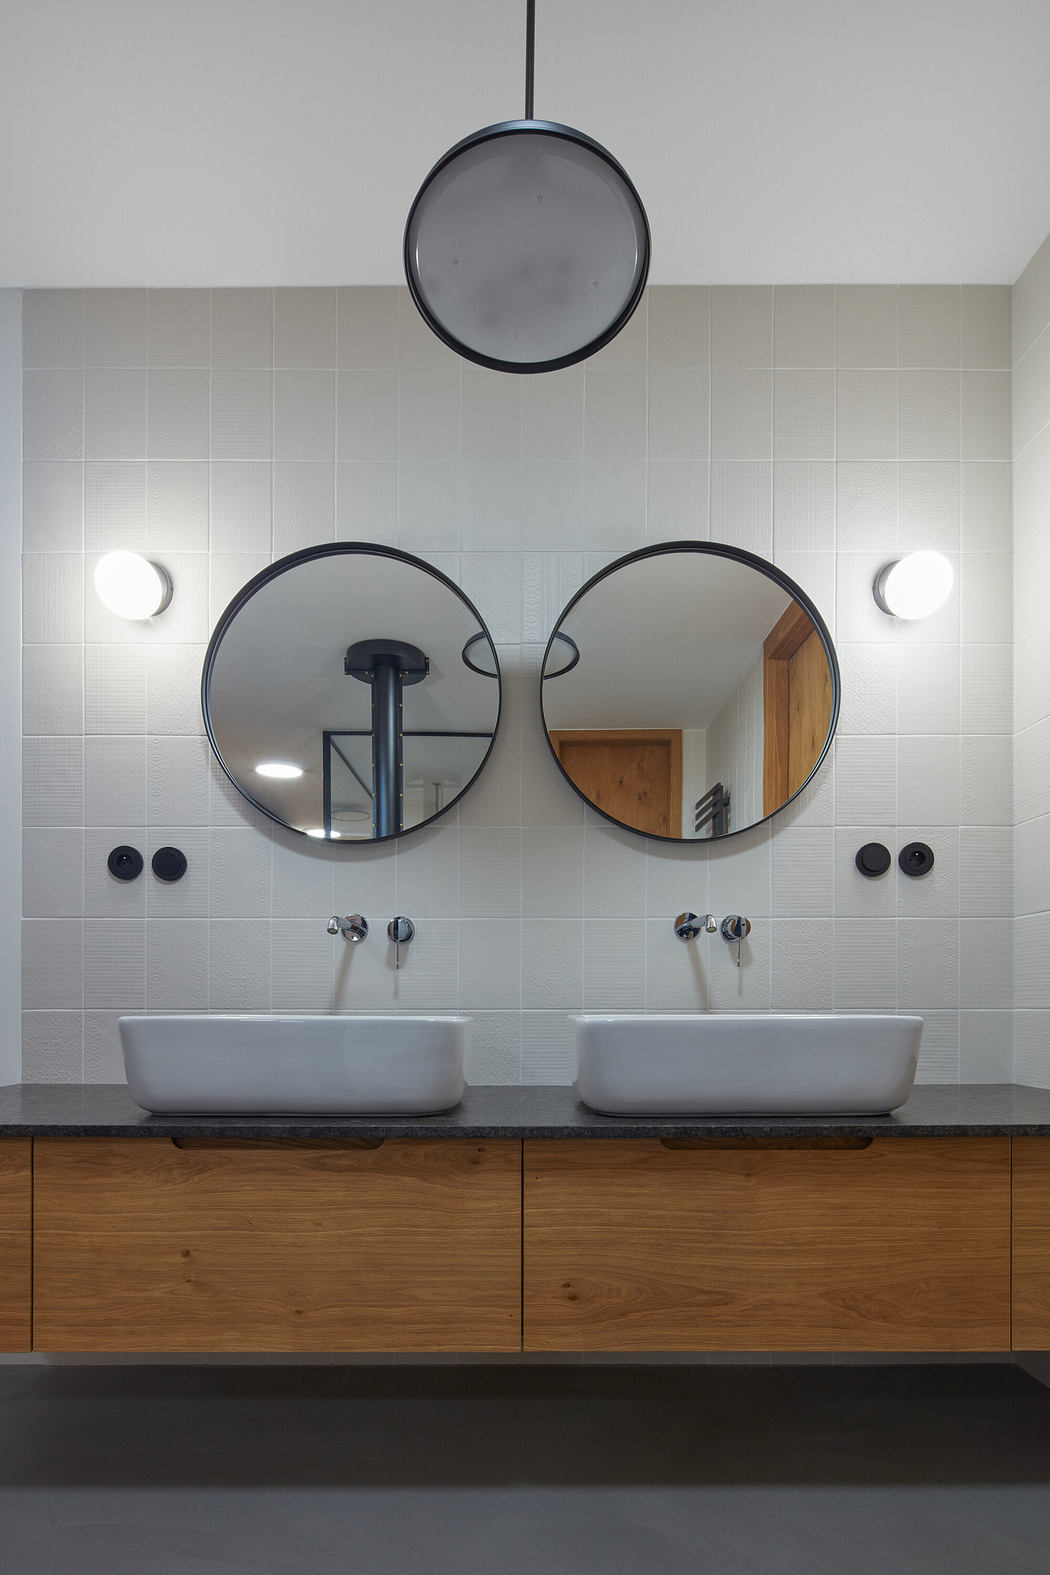 Modern bathroom with twin sinks, circular mirrors, and pendant lighting.